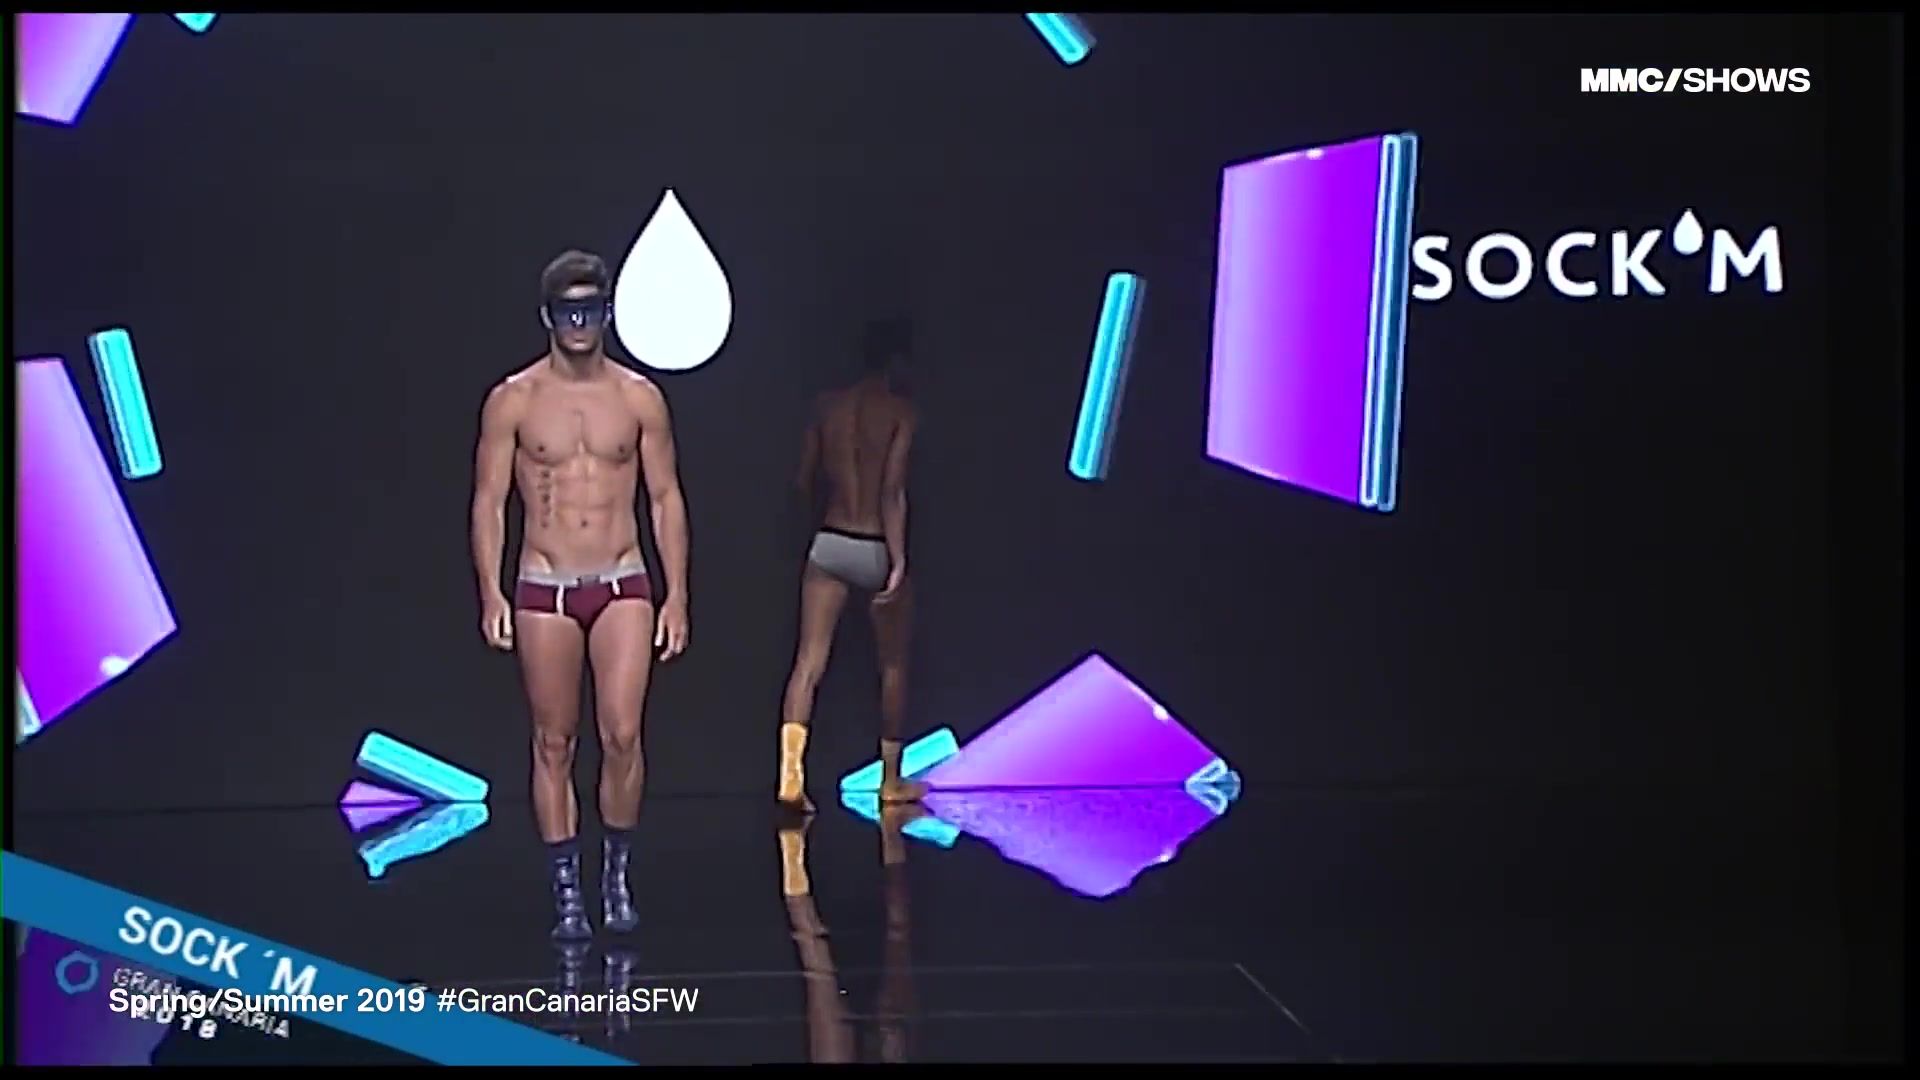 Spooning MODA BANO. Handsome guys showing new models of men's swimwear Nina Hartley